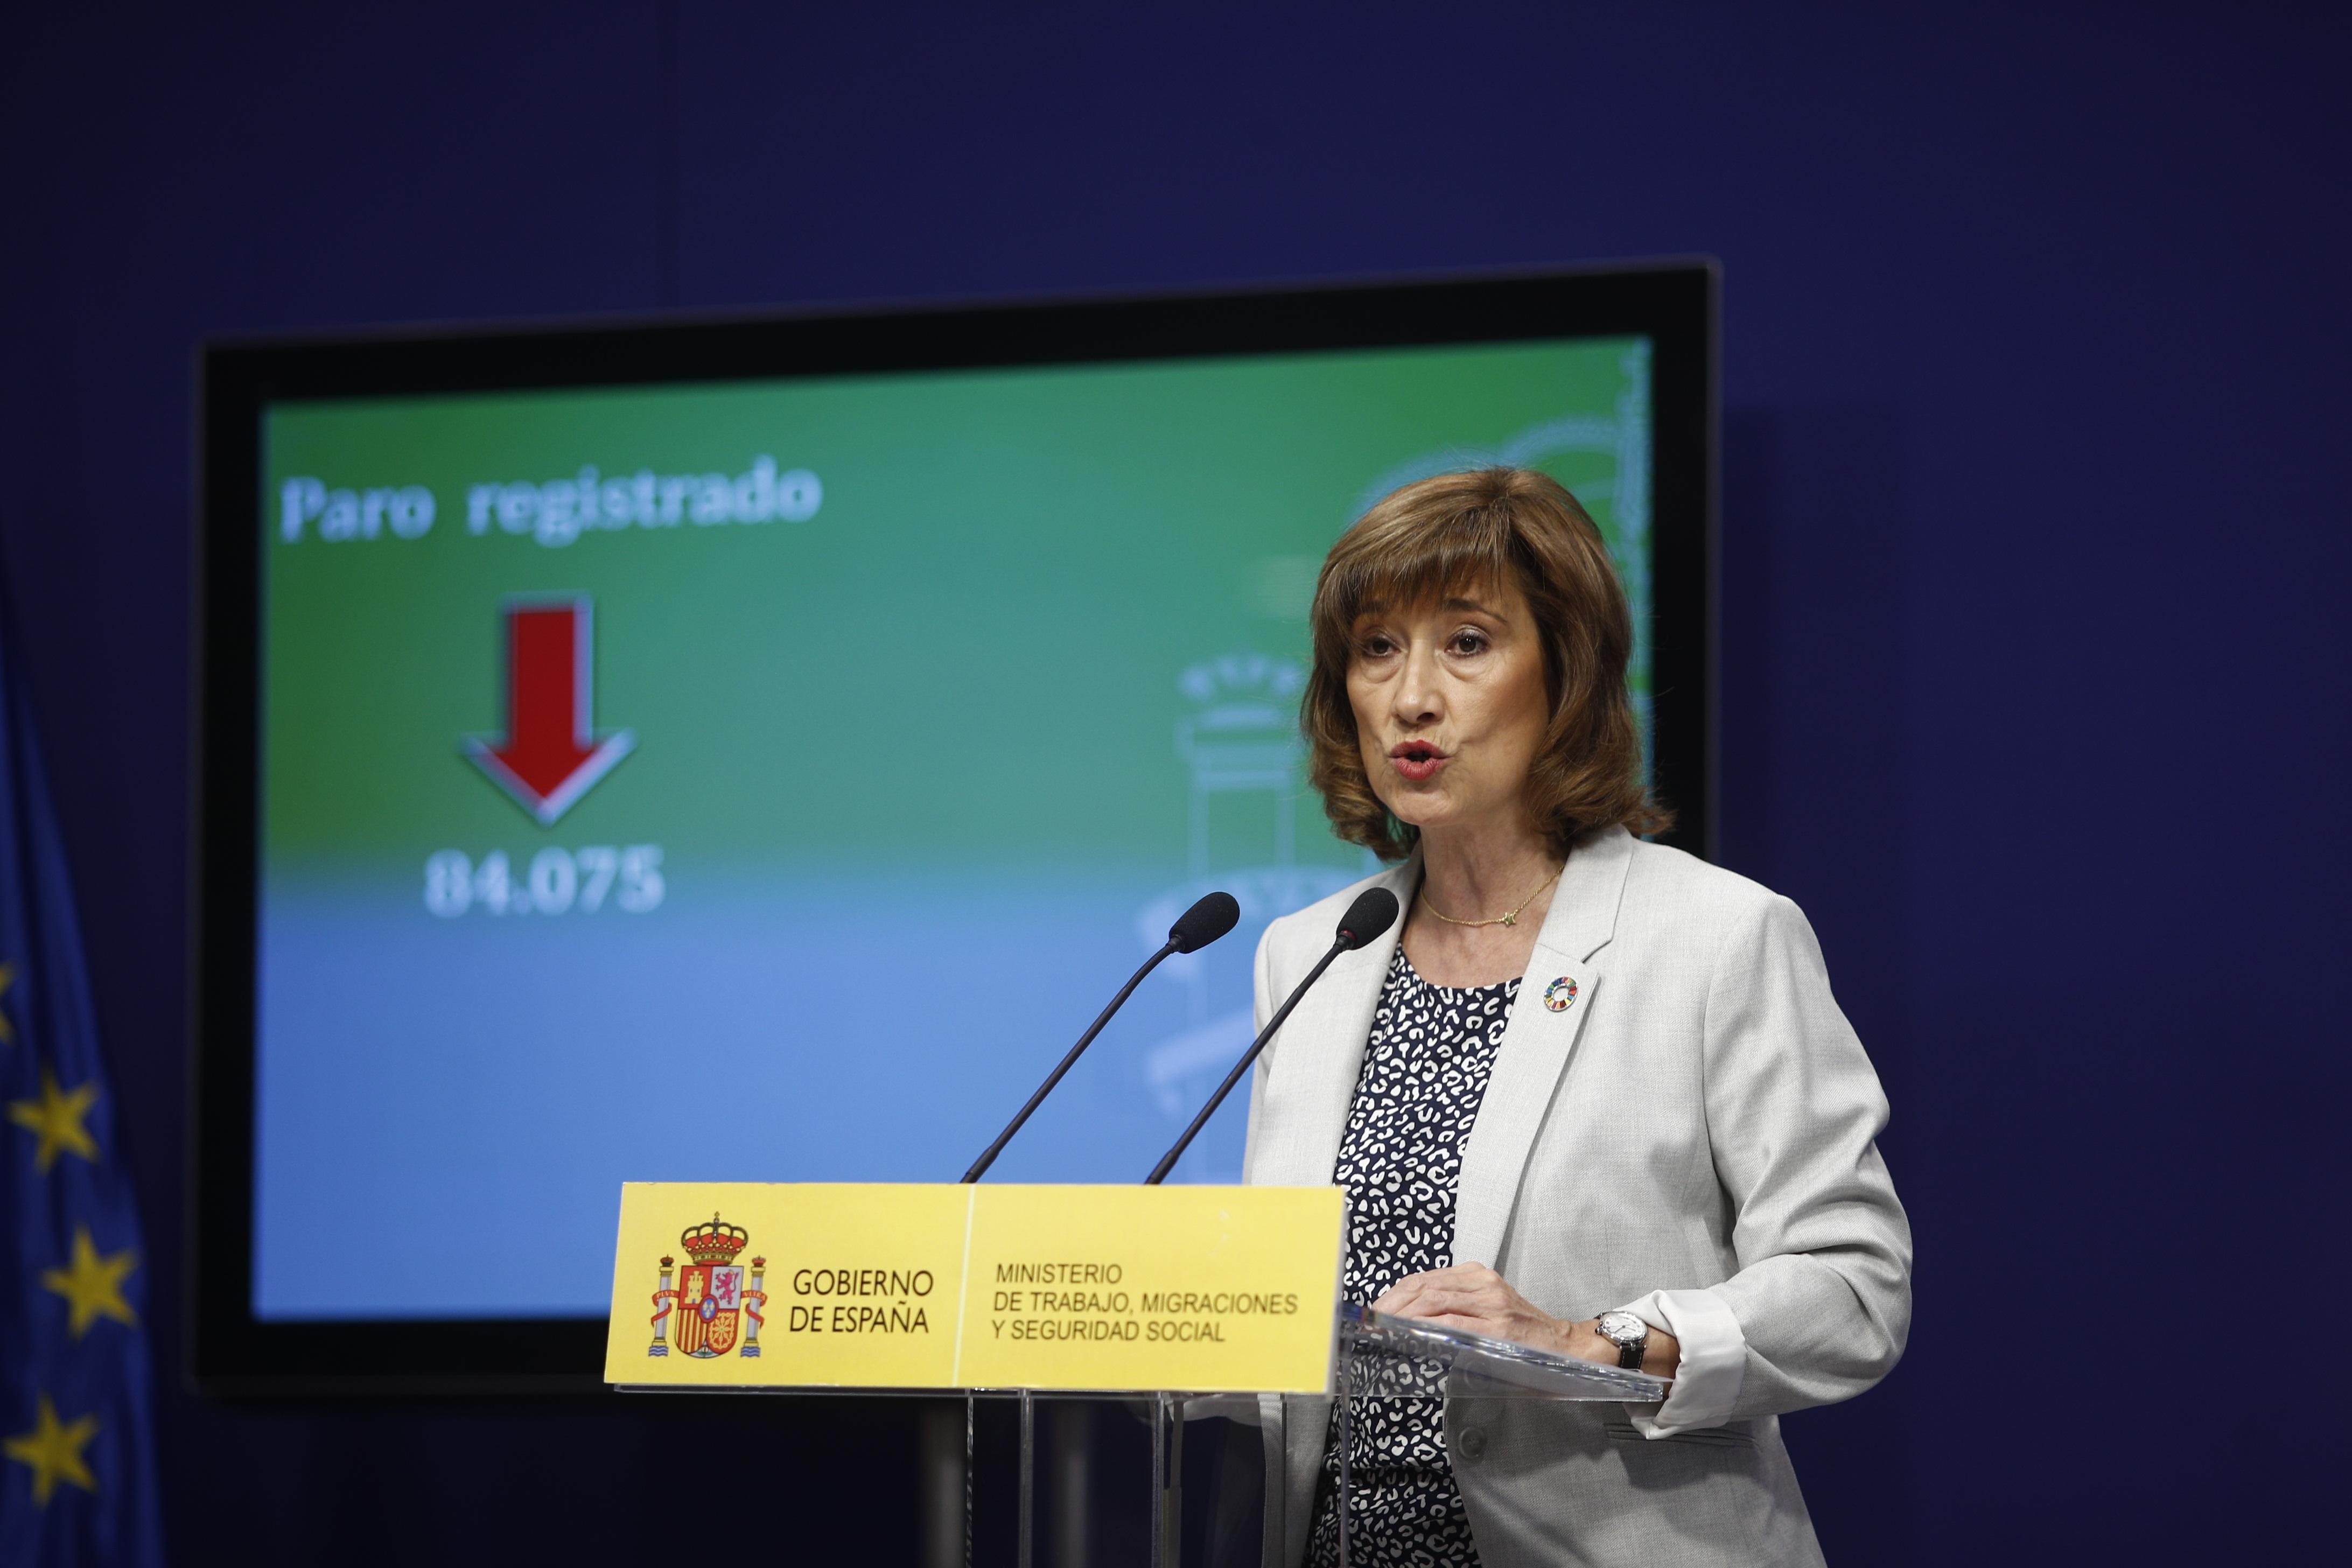 La secretaria de Estado de Empleo Yolanda Valdeolivas presenta los datos de paro registrado - Eduardo Parra Europa Press